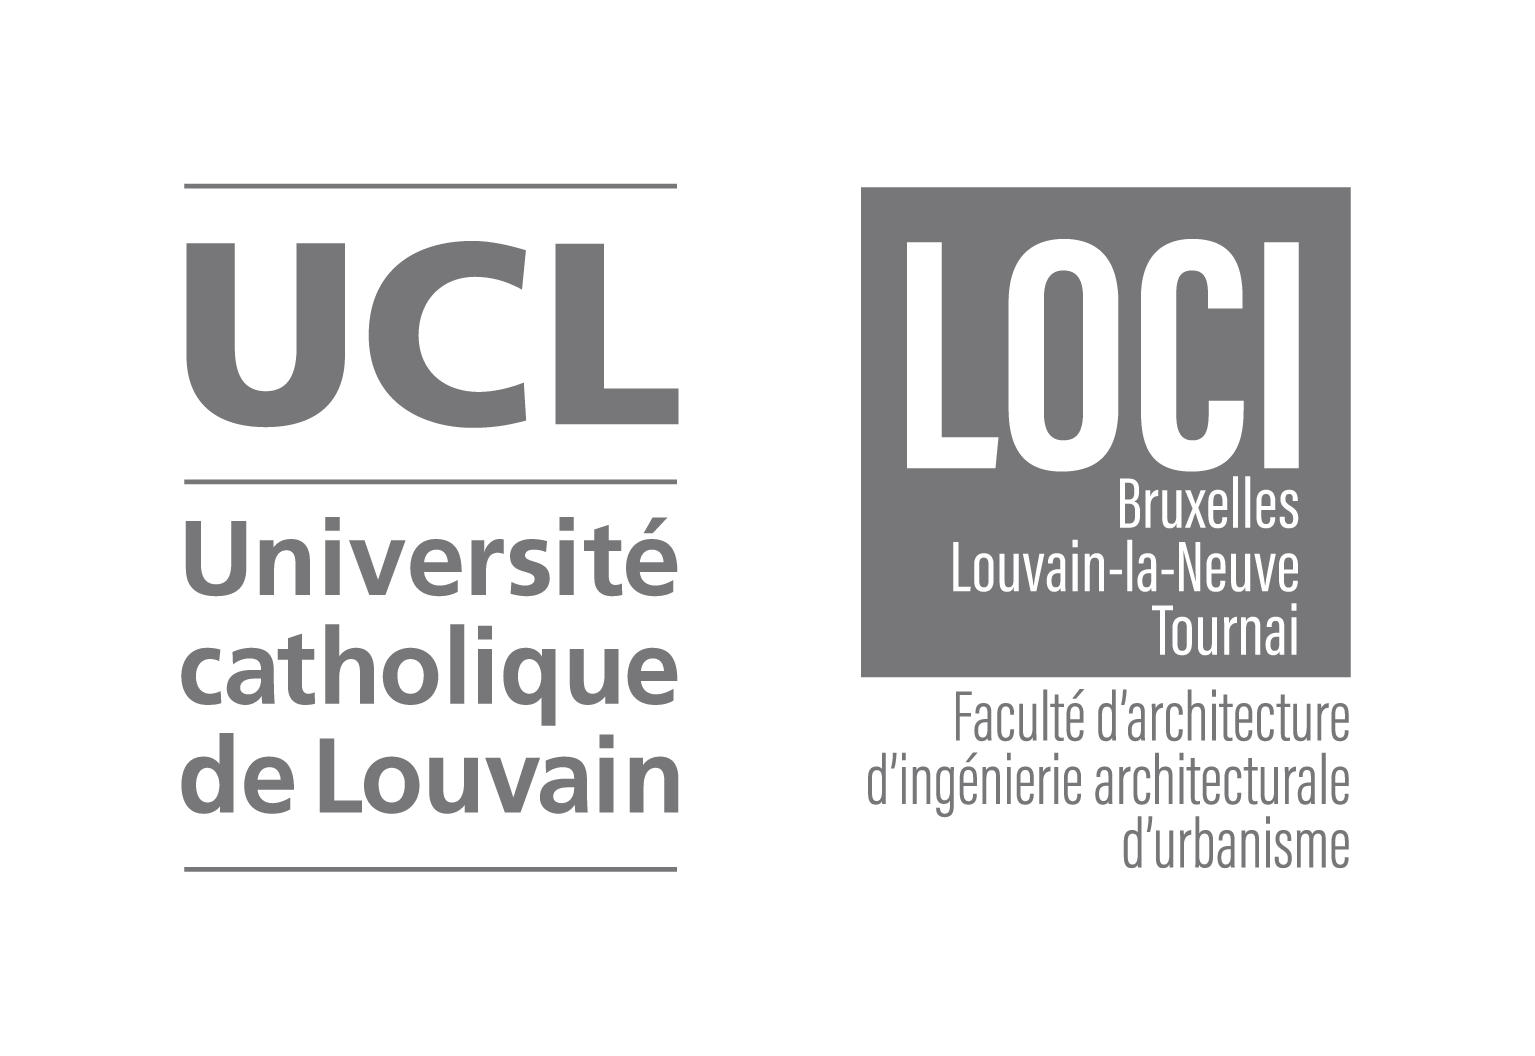 image LOCI_UCL.png (32.3kB)
Lien vers: https://uclouvain.be/fr/facultes/loci